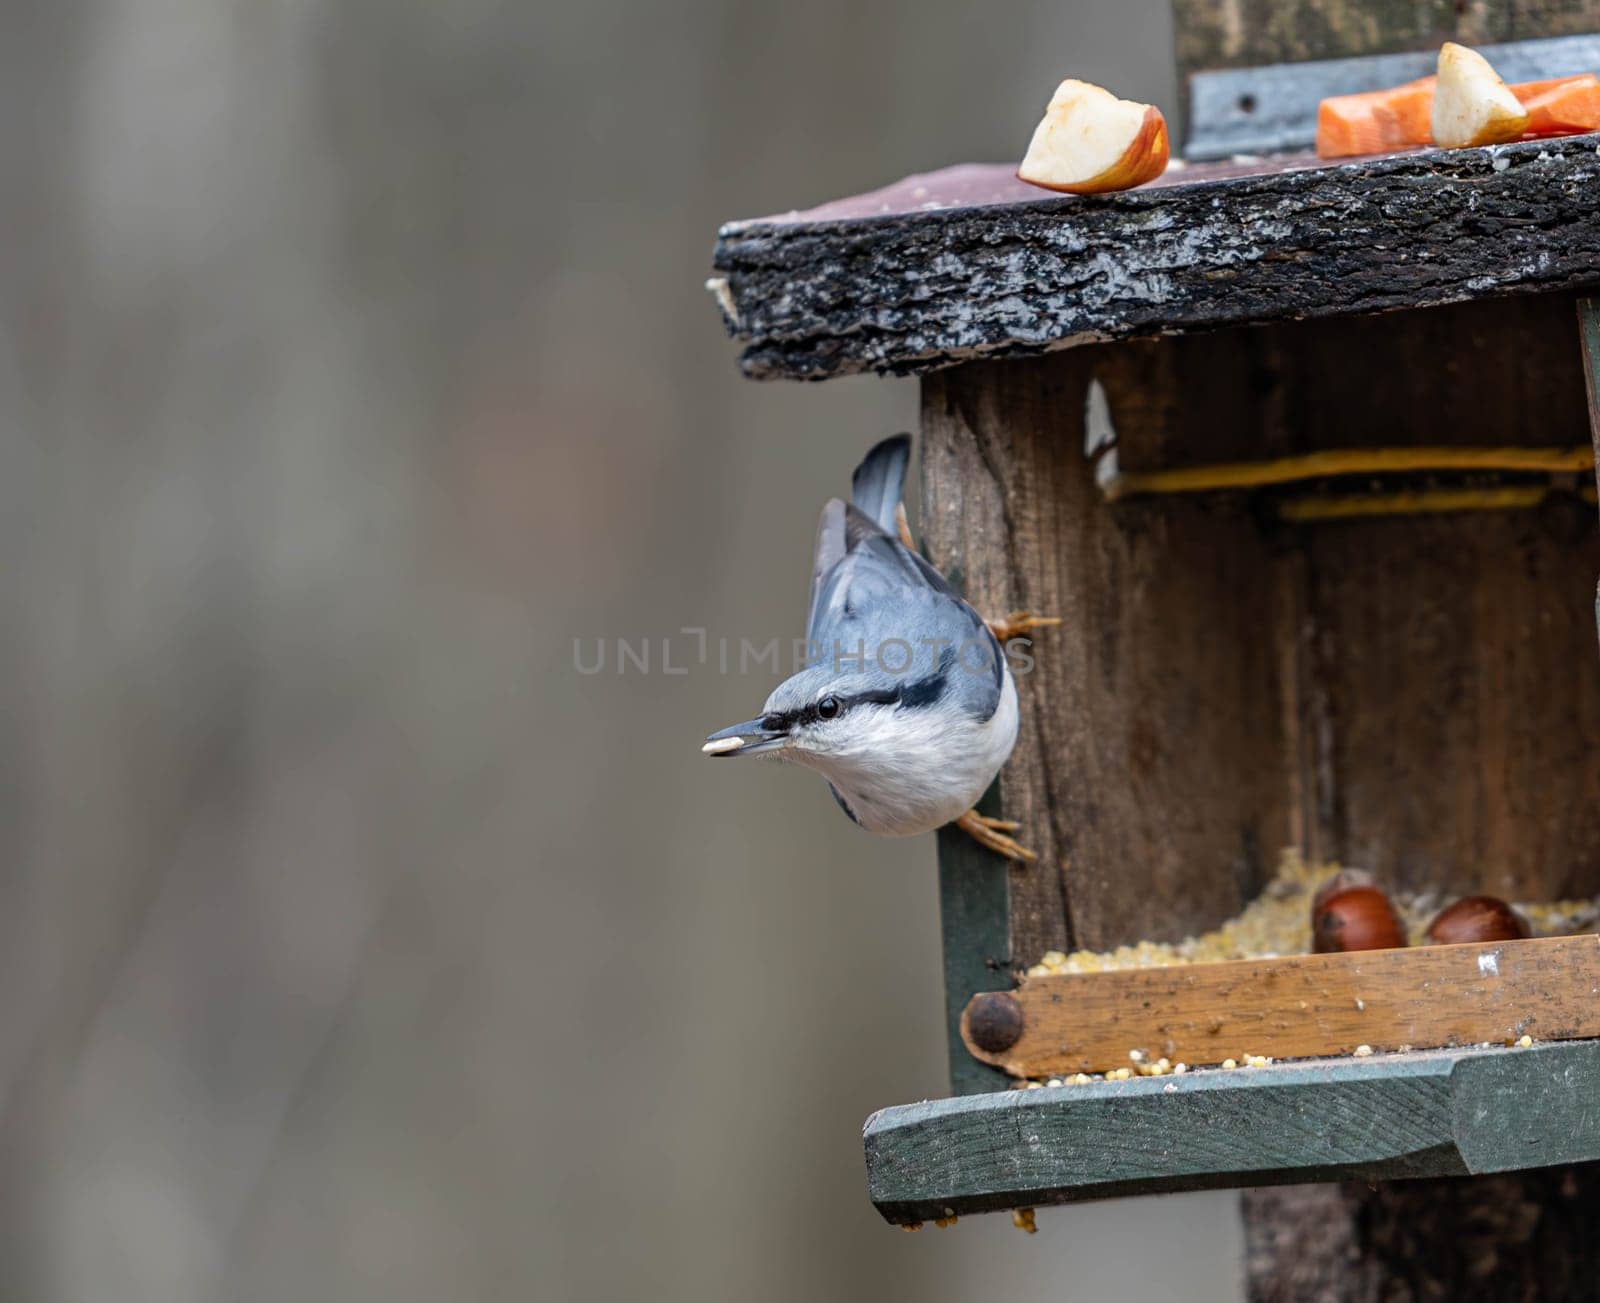 Natural Wildlife Bird, Nuthatch, Feeding Behavior Outdoors. High quality photo.